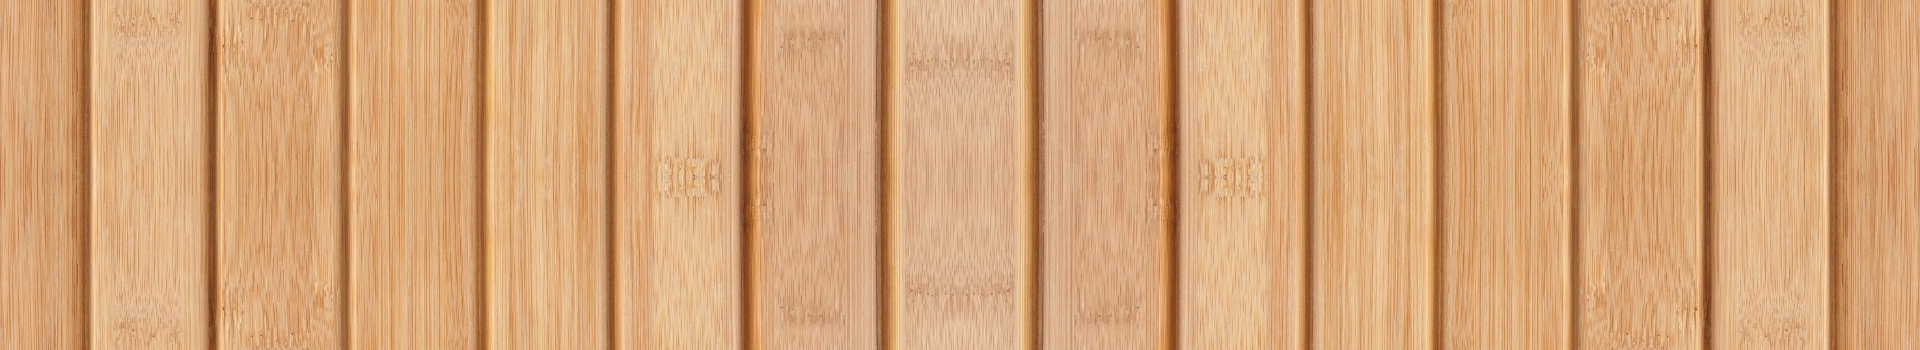 banner - deski drewniane podłogowe